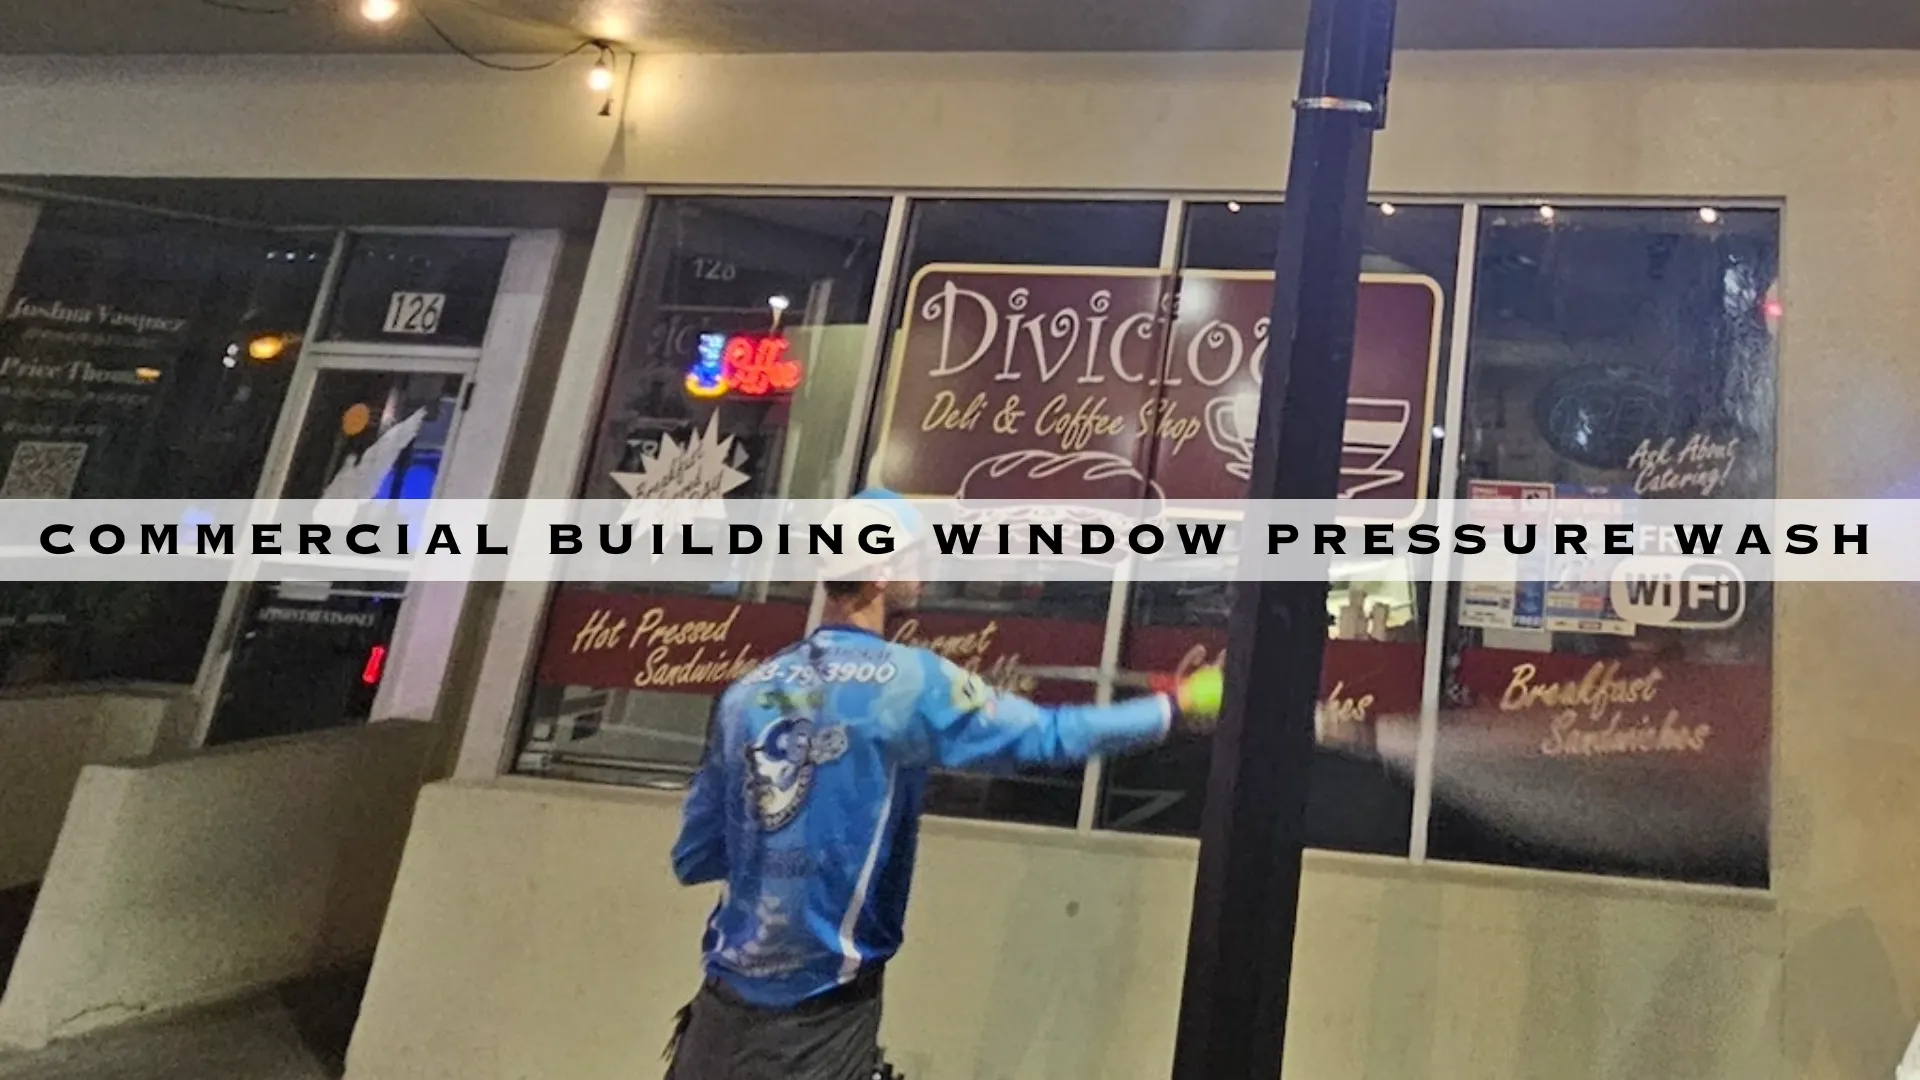 COMMERCIAL BUILDING WINDOW PRESSURE WASH - HERO